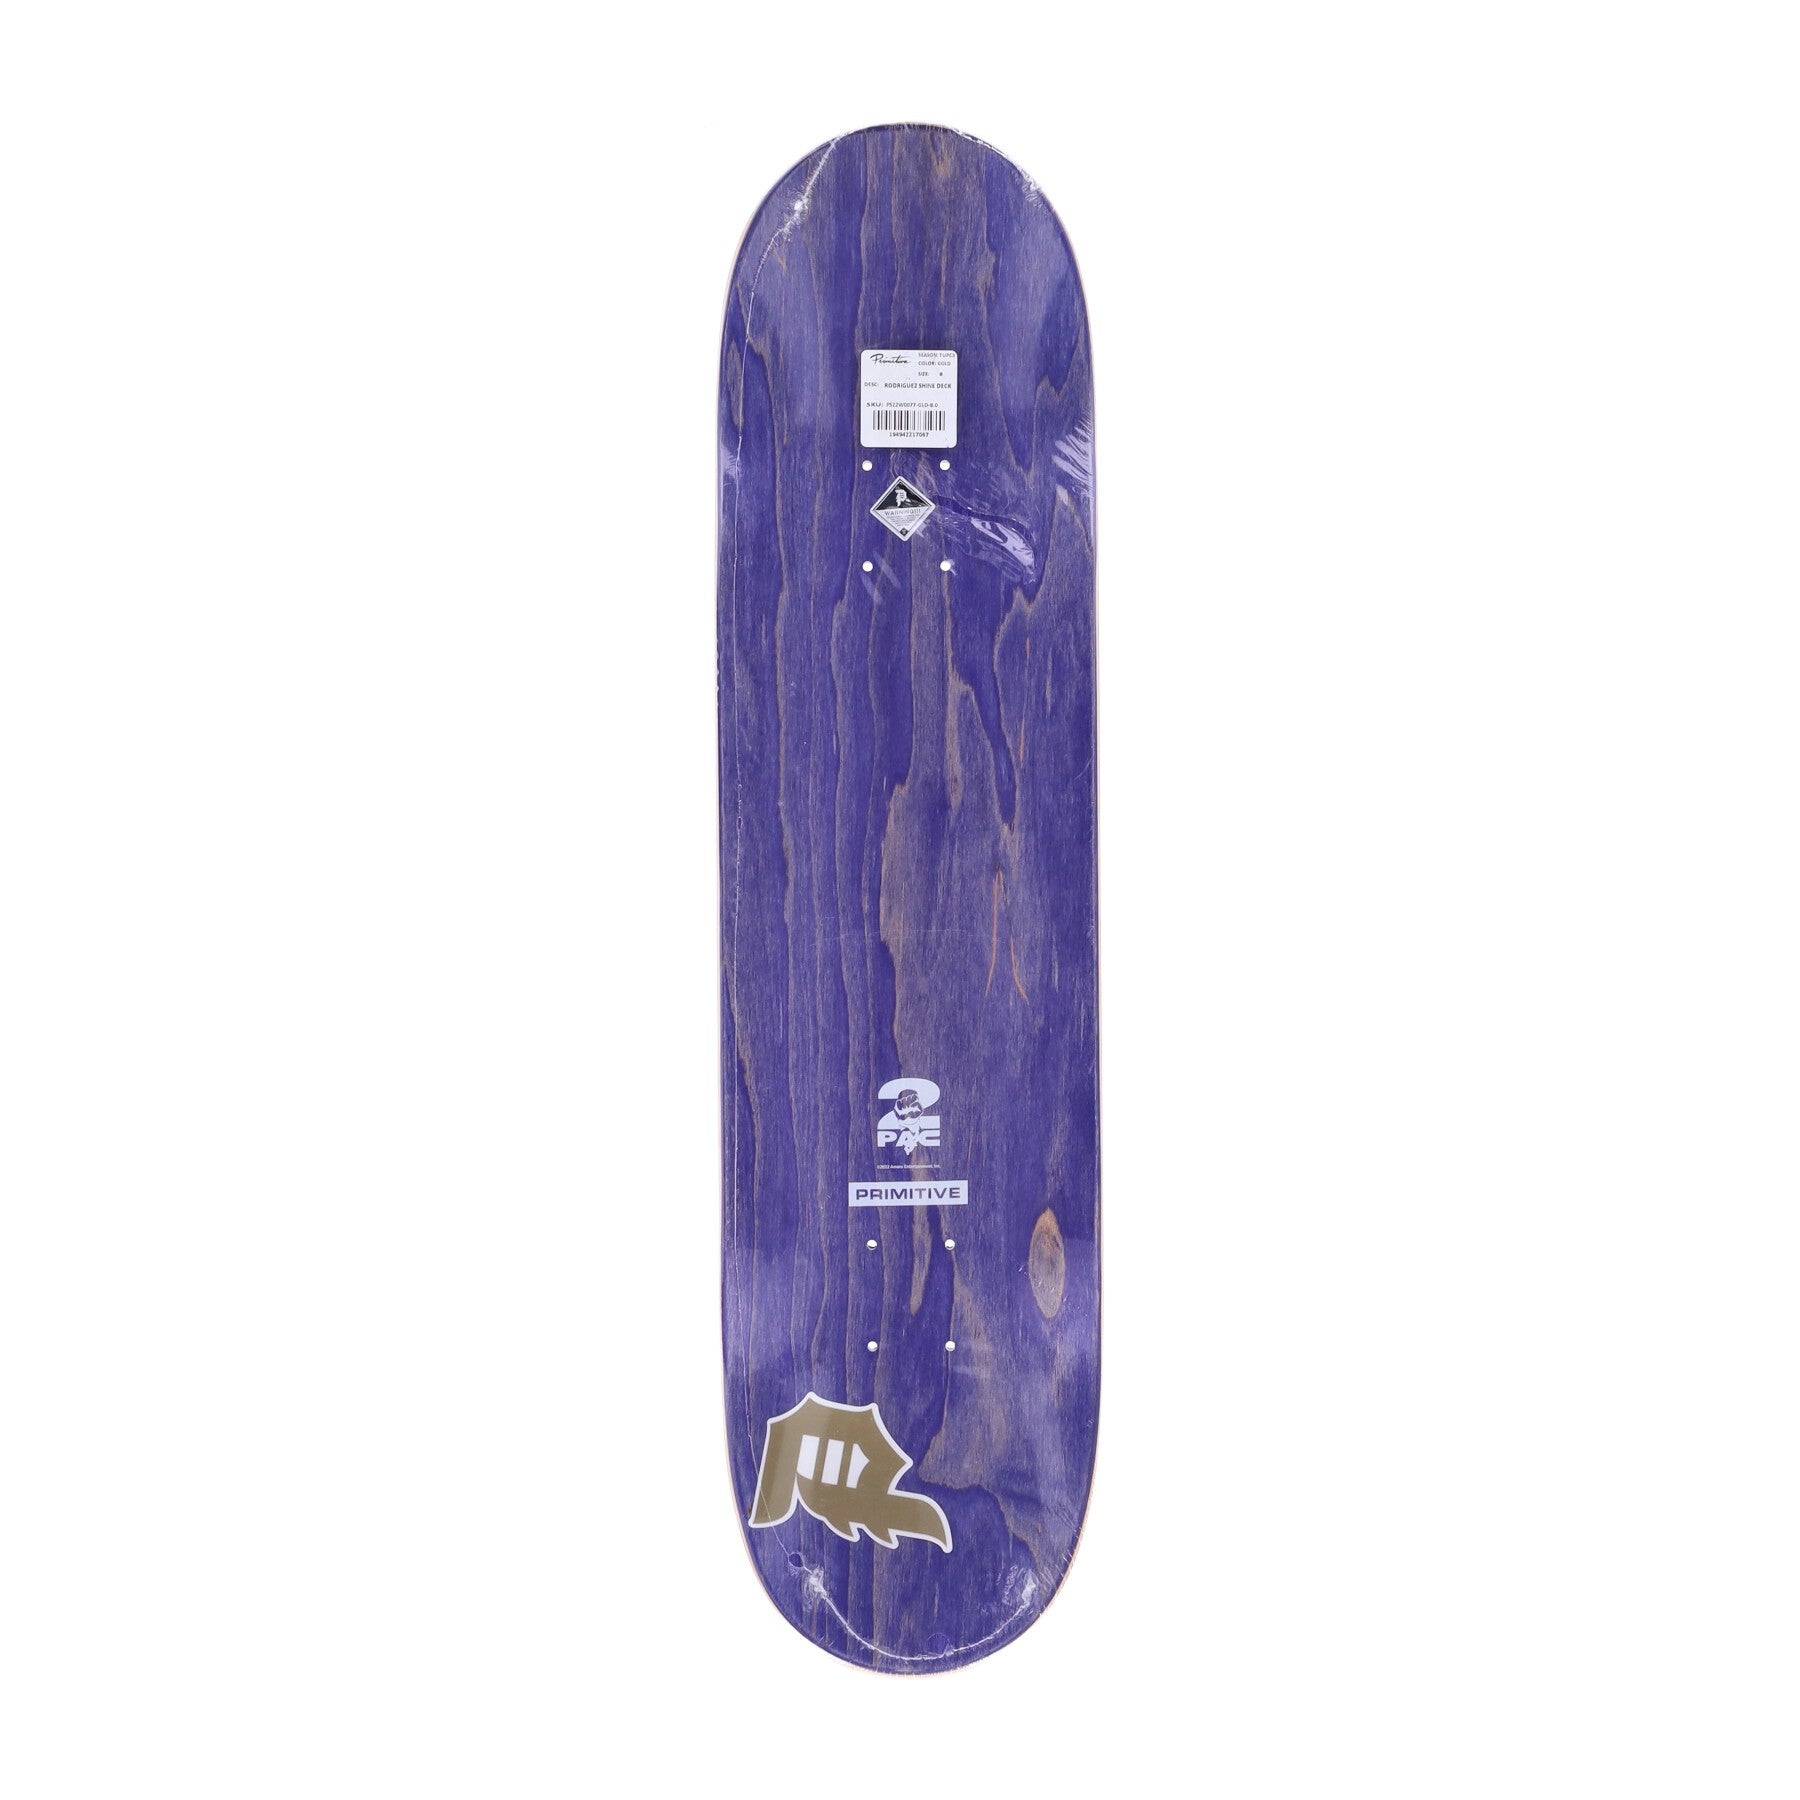 Primitive, Skateboard Tavola Uomo Rodriguez Shine Deck X 2pac, Royal Blue